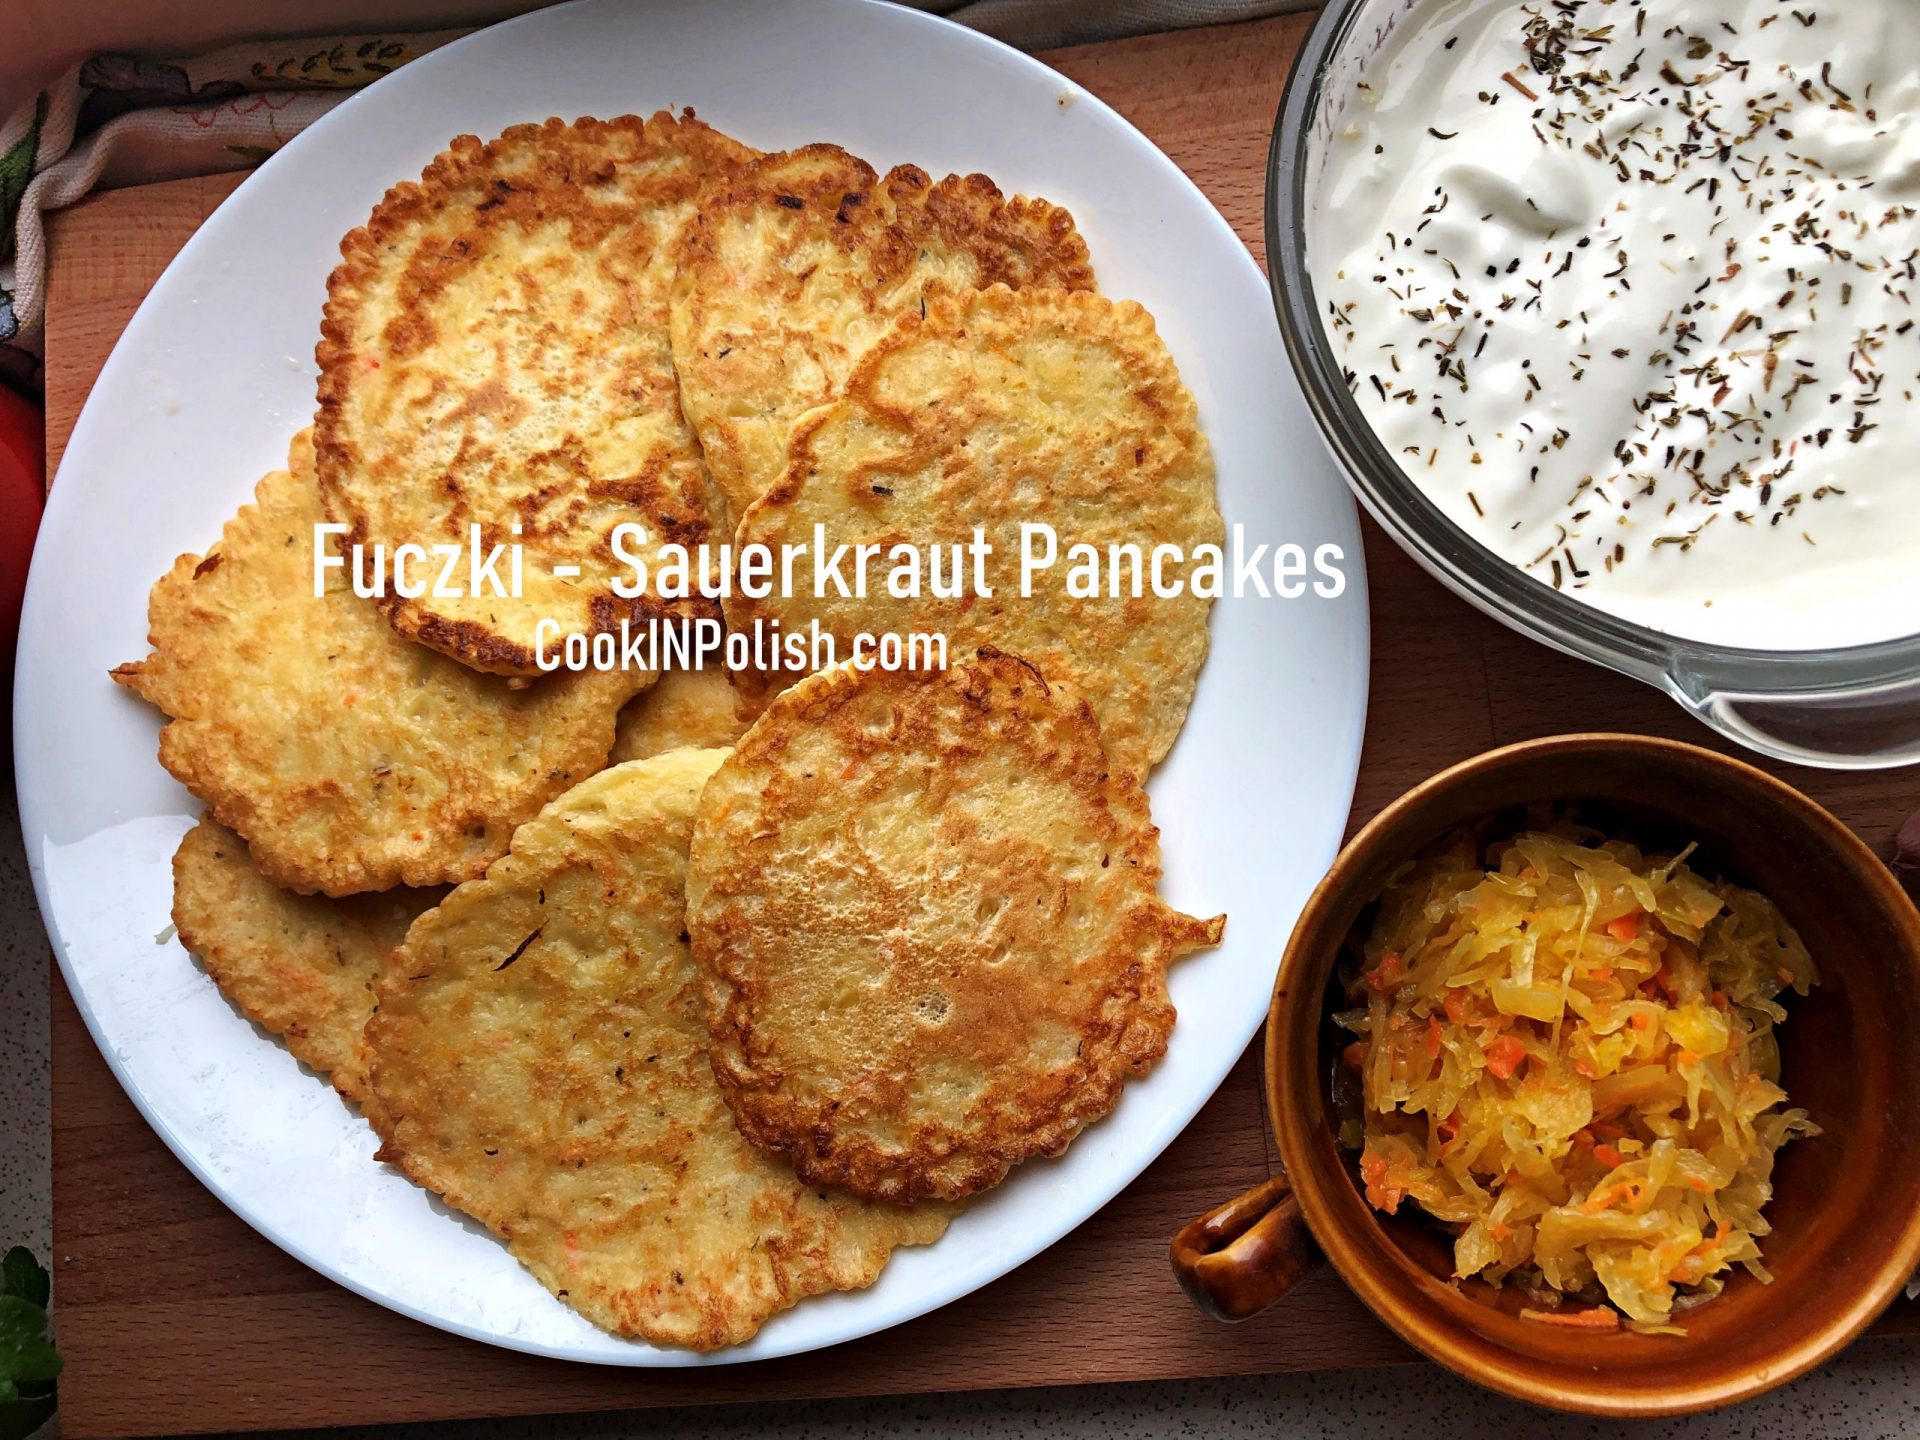 Fuczki – Sauerkraut Pancakes